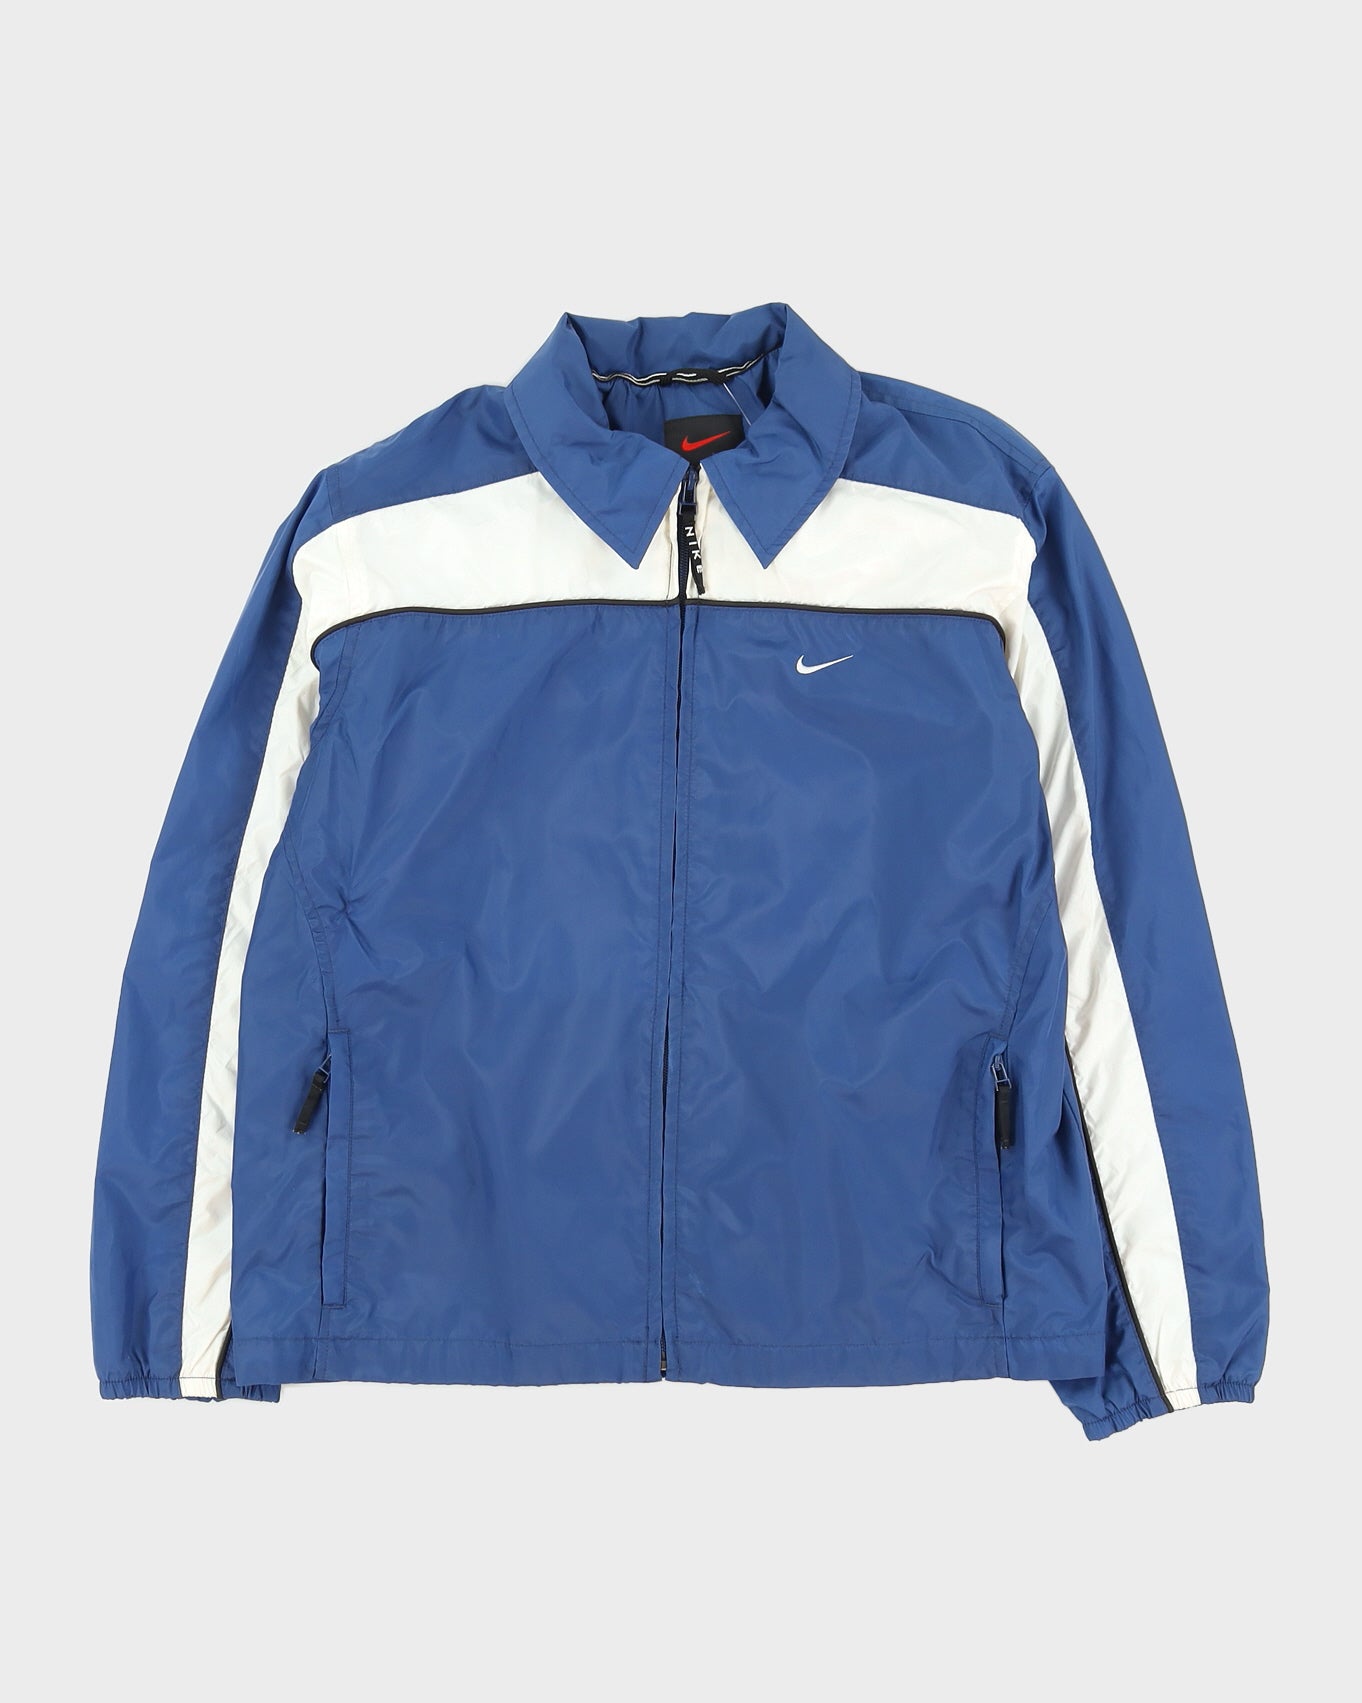 Vintage 90s Nike Blue Track Jacket - M